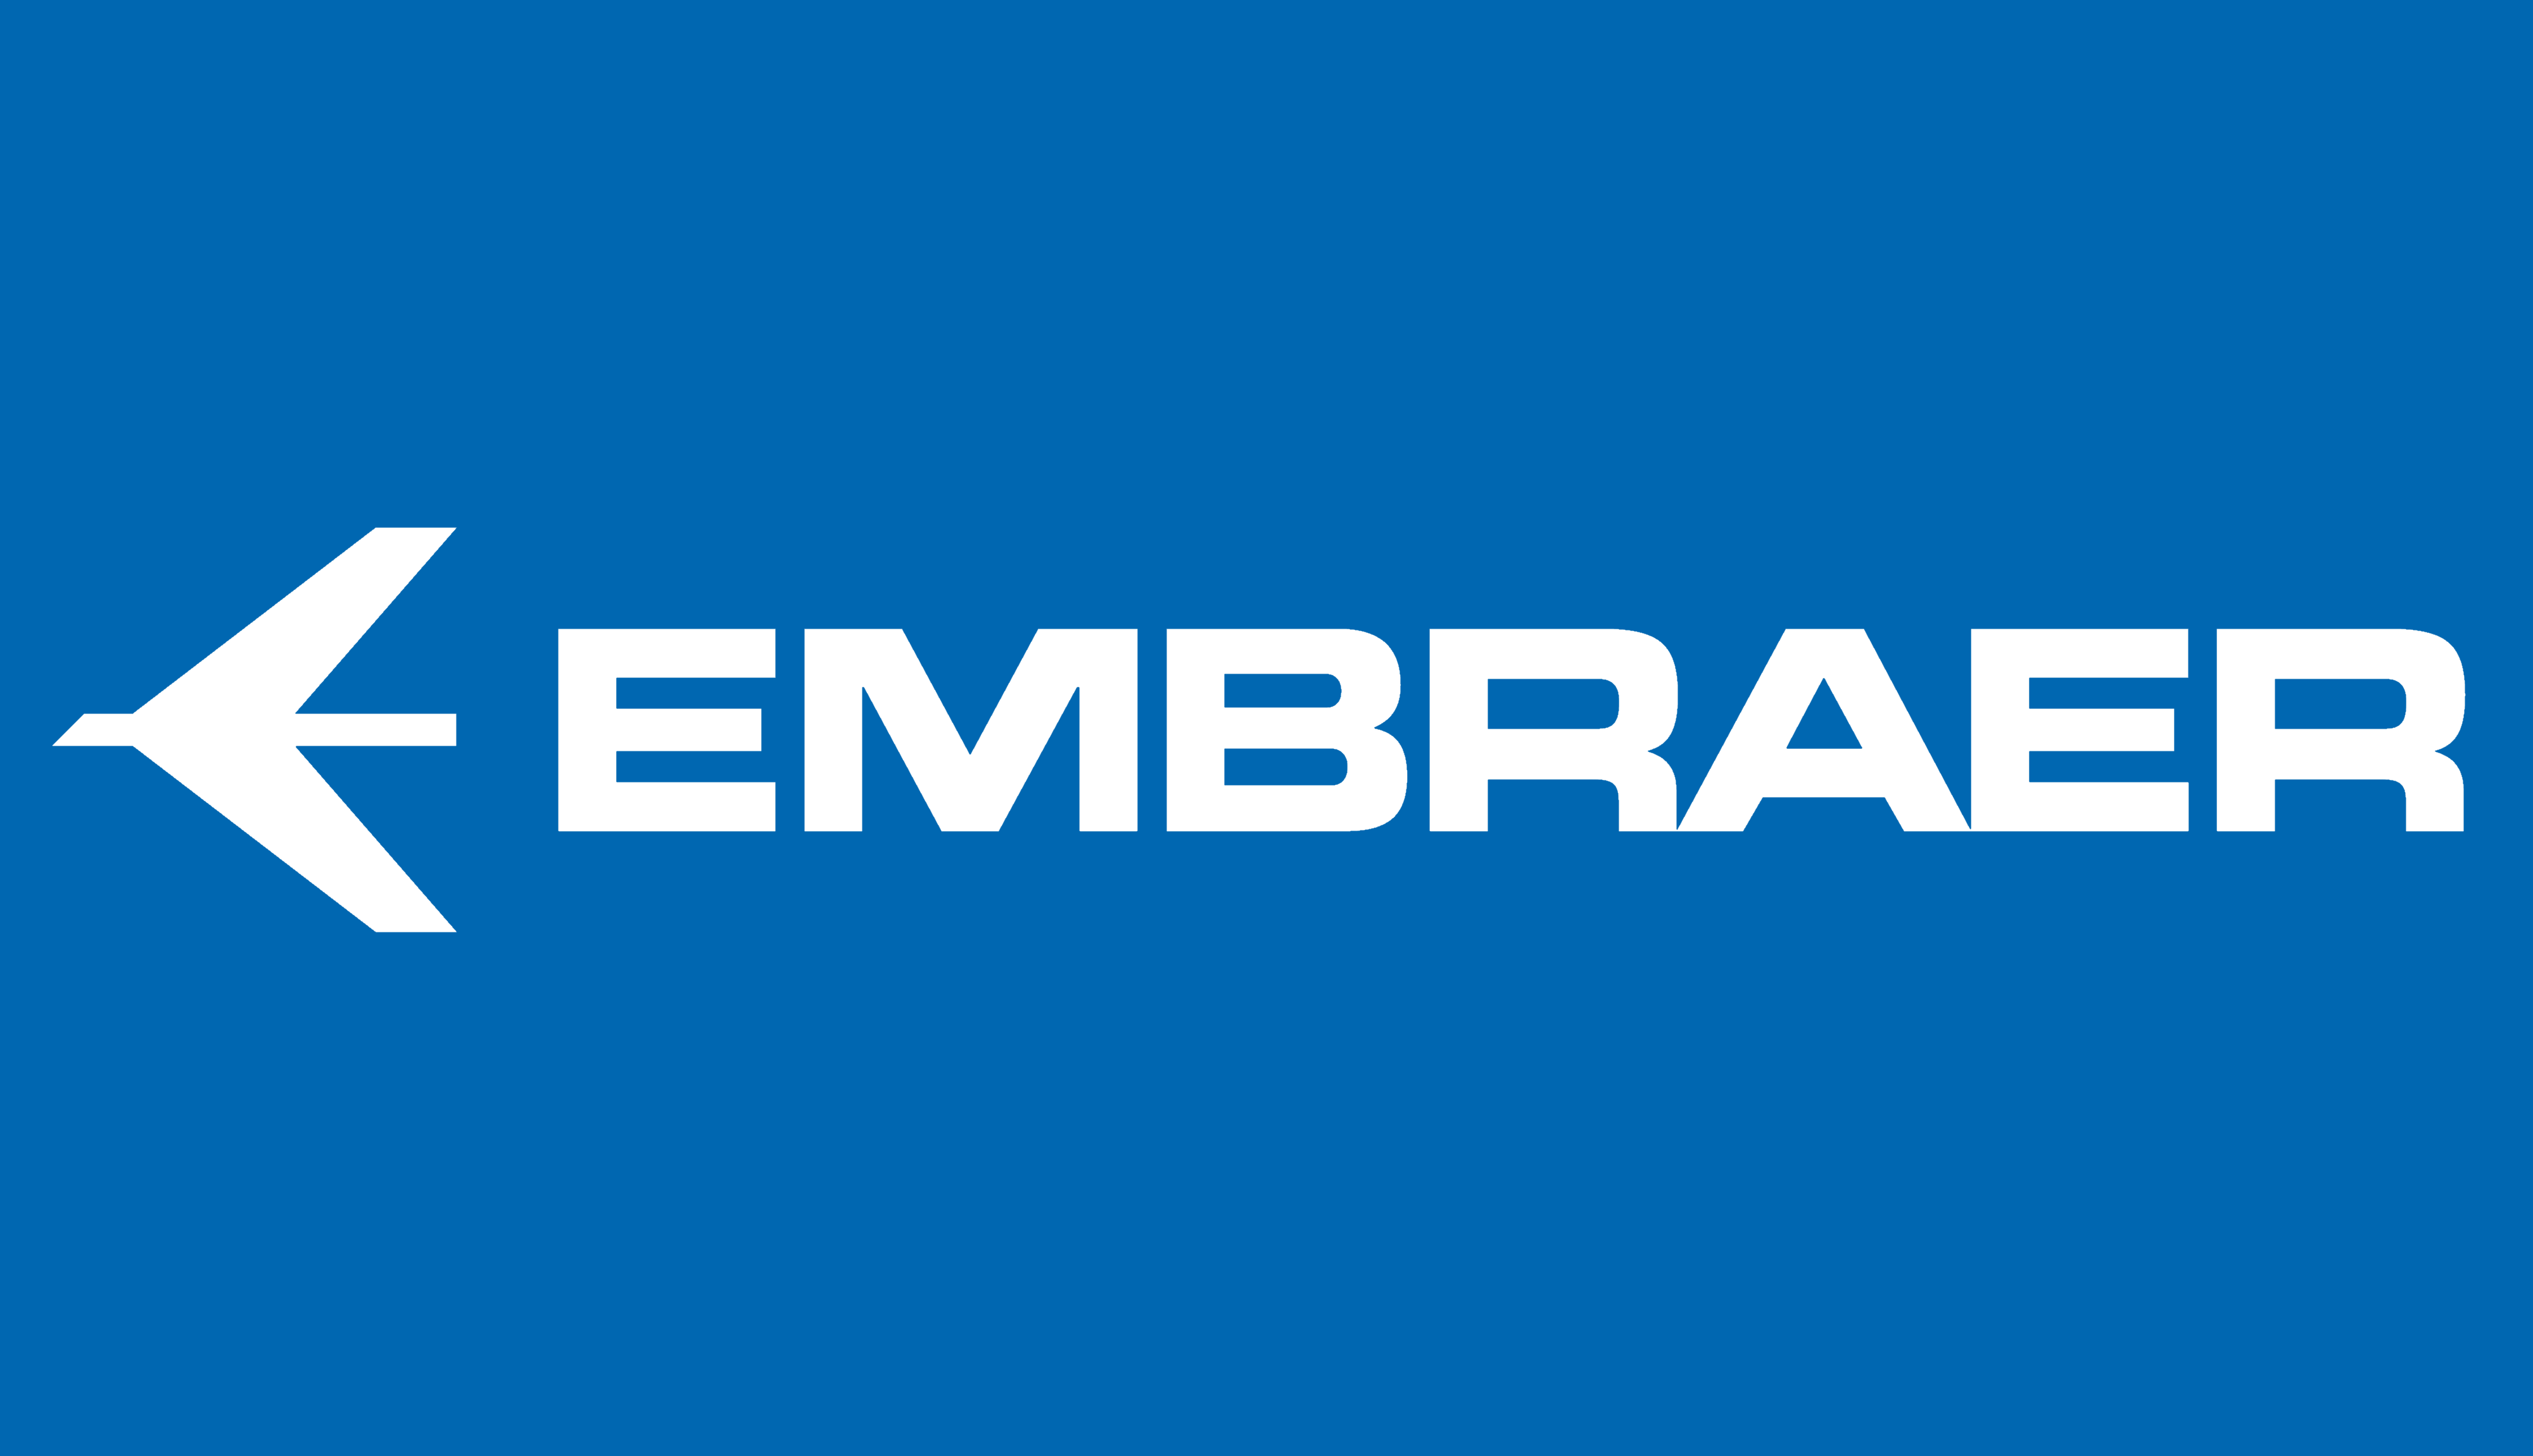 Embraer Logo photo - 1